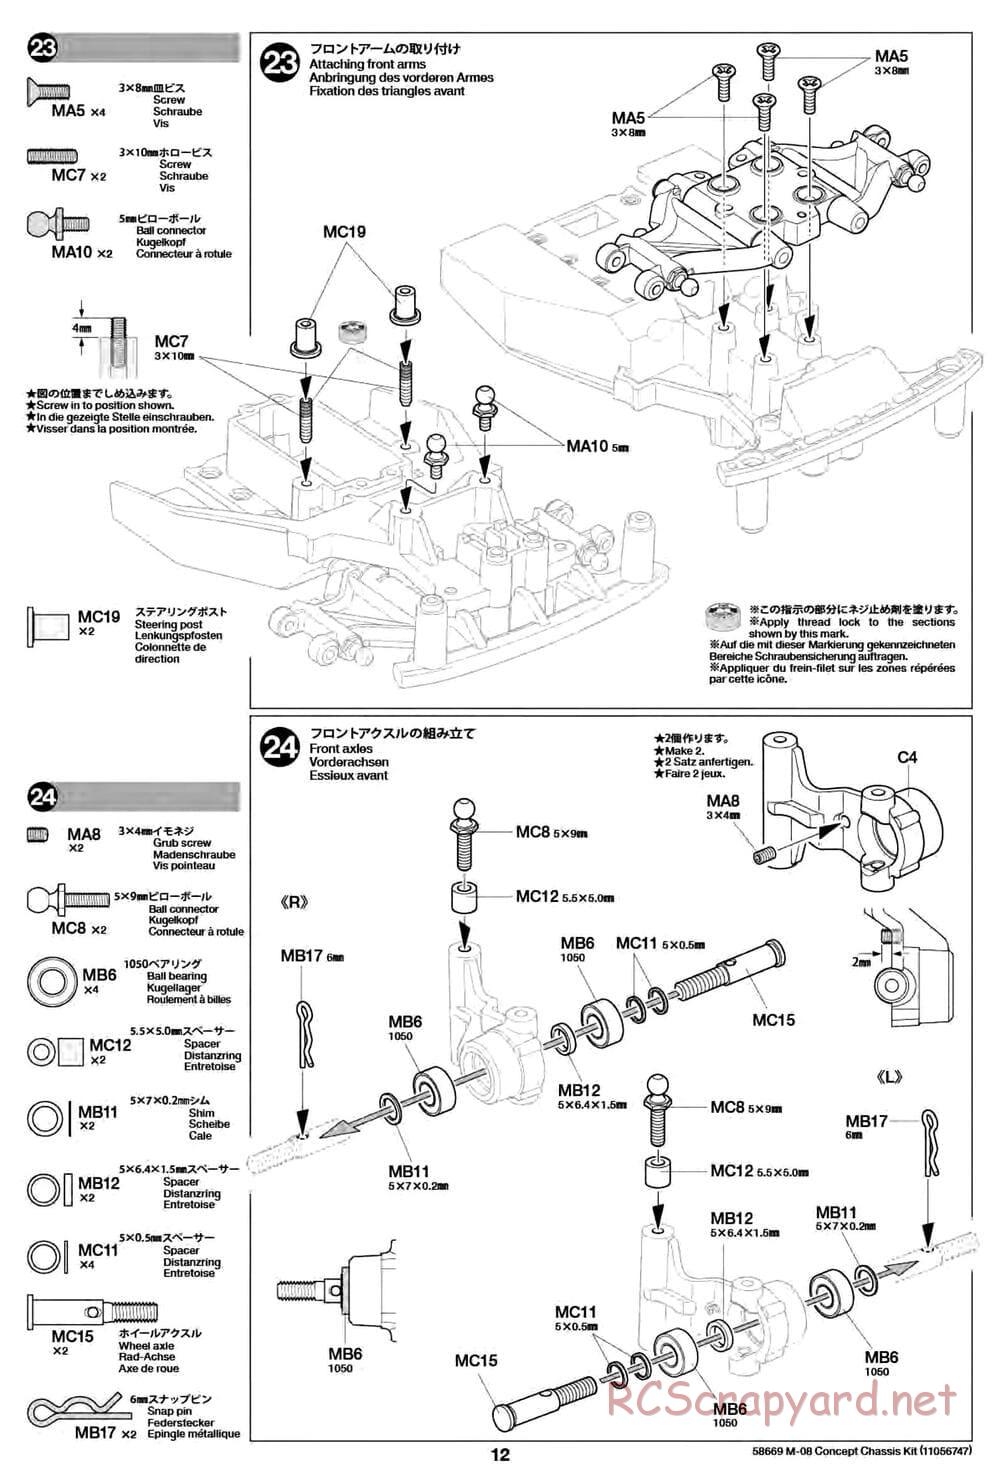 Tamiya - M-08 Concept Chassis - Manual - Page 12